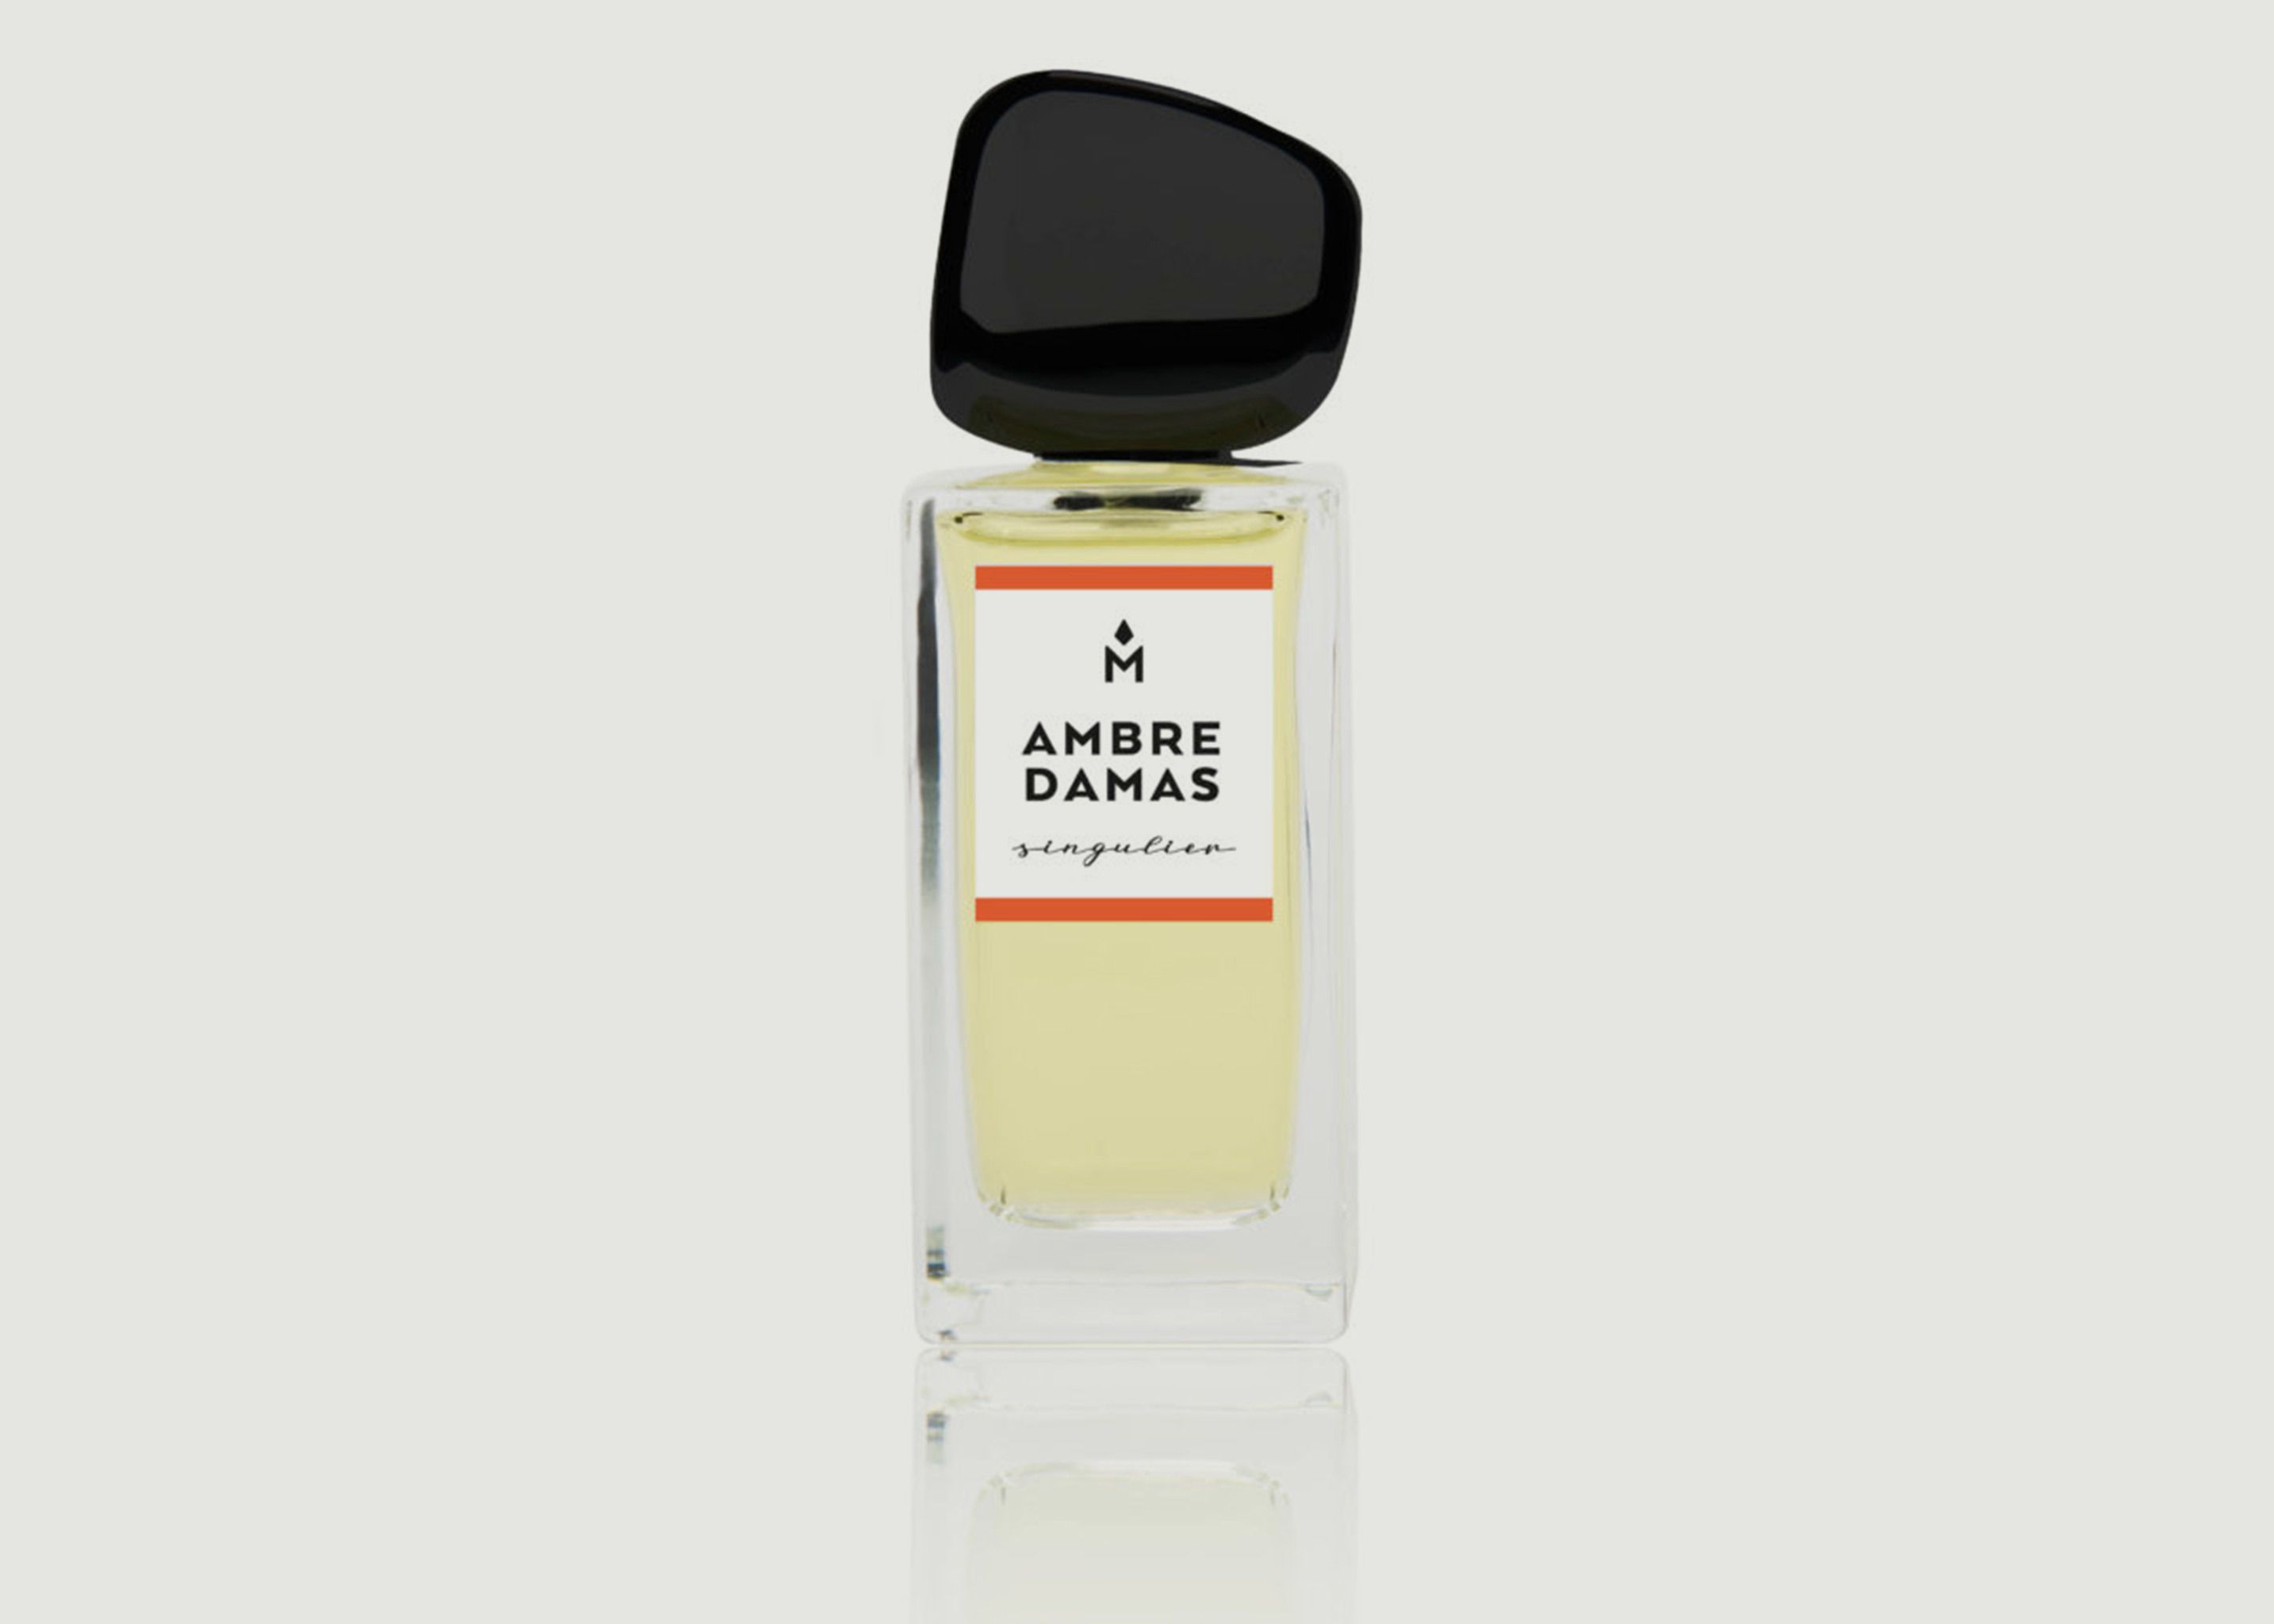 Ambre Damas 50ml Perfume - Ausmane Paris